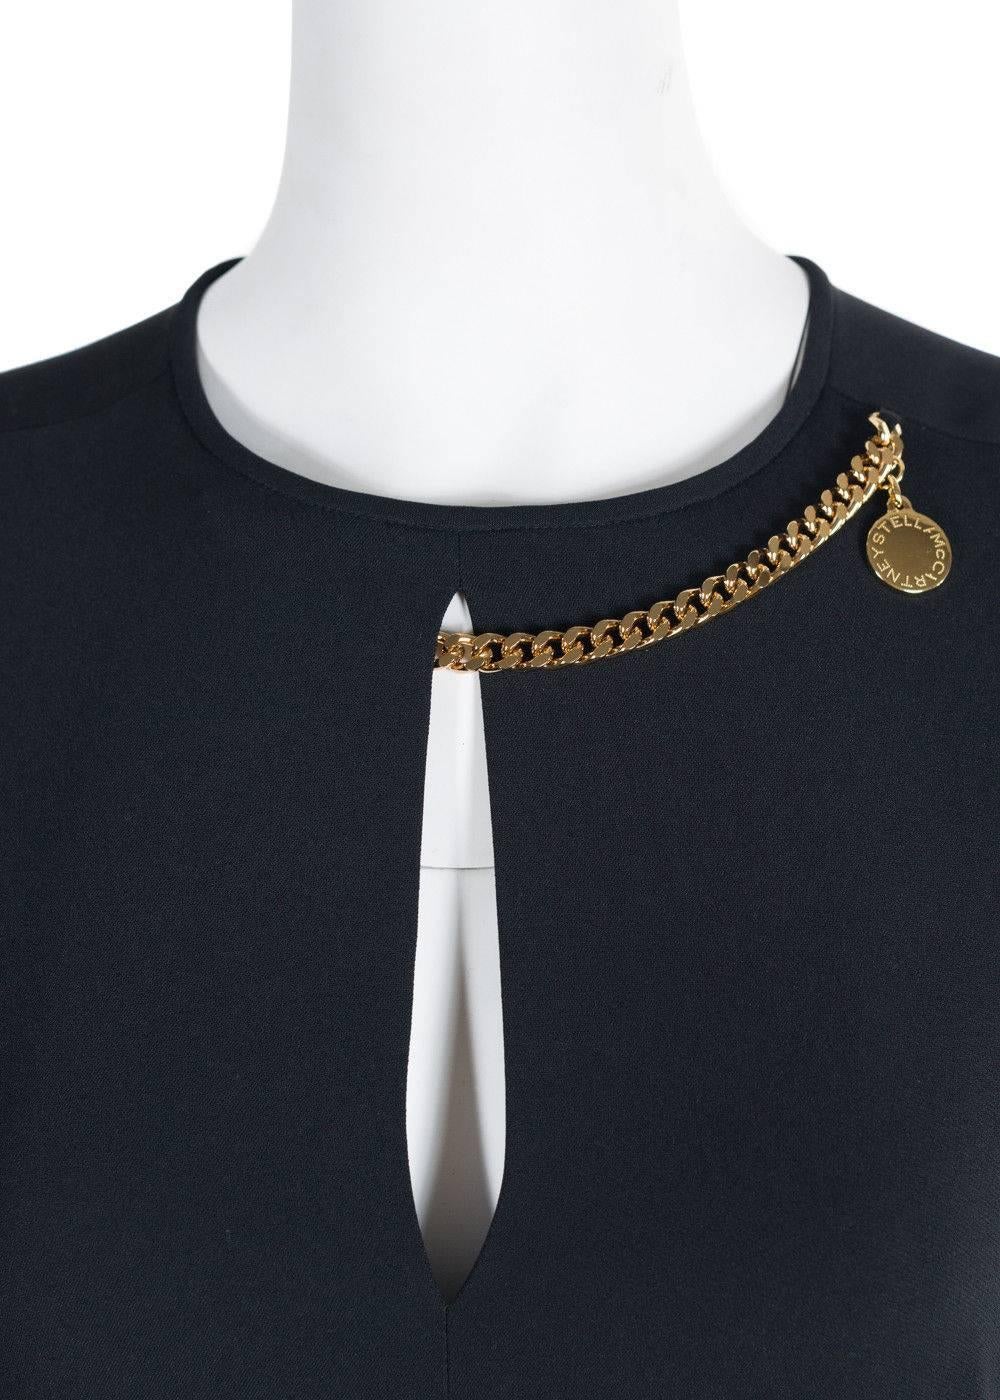 Women's Stella McCartney Womens Black Slim Cut Jumpsuit with Gold Chain